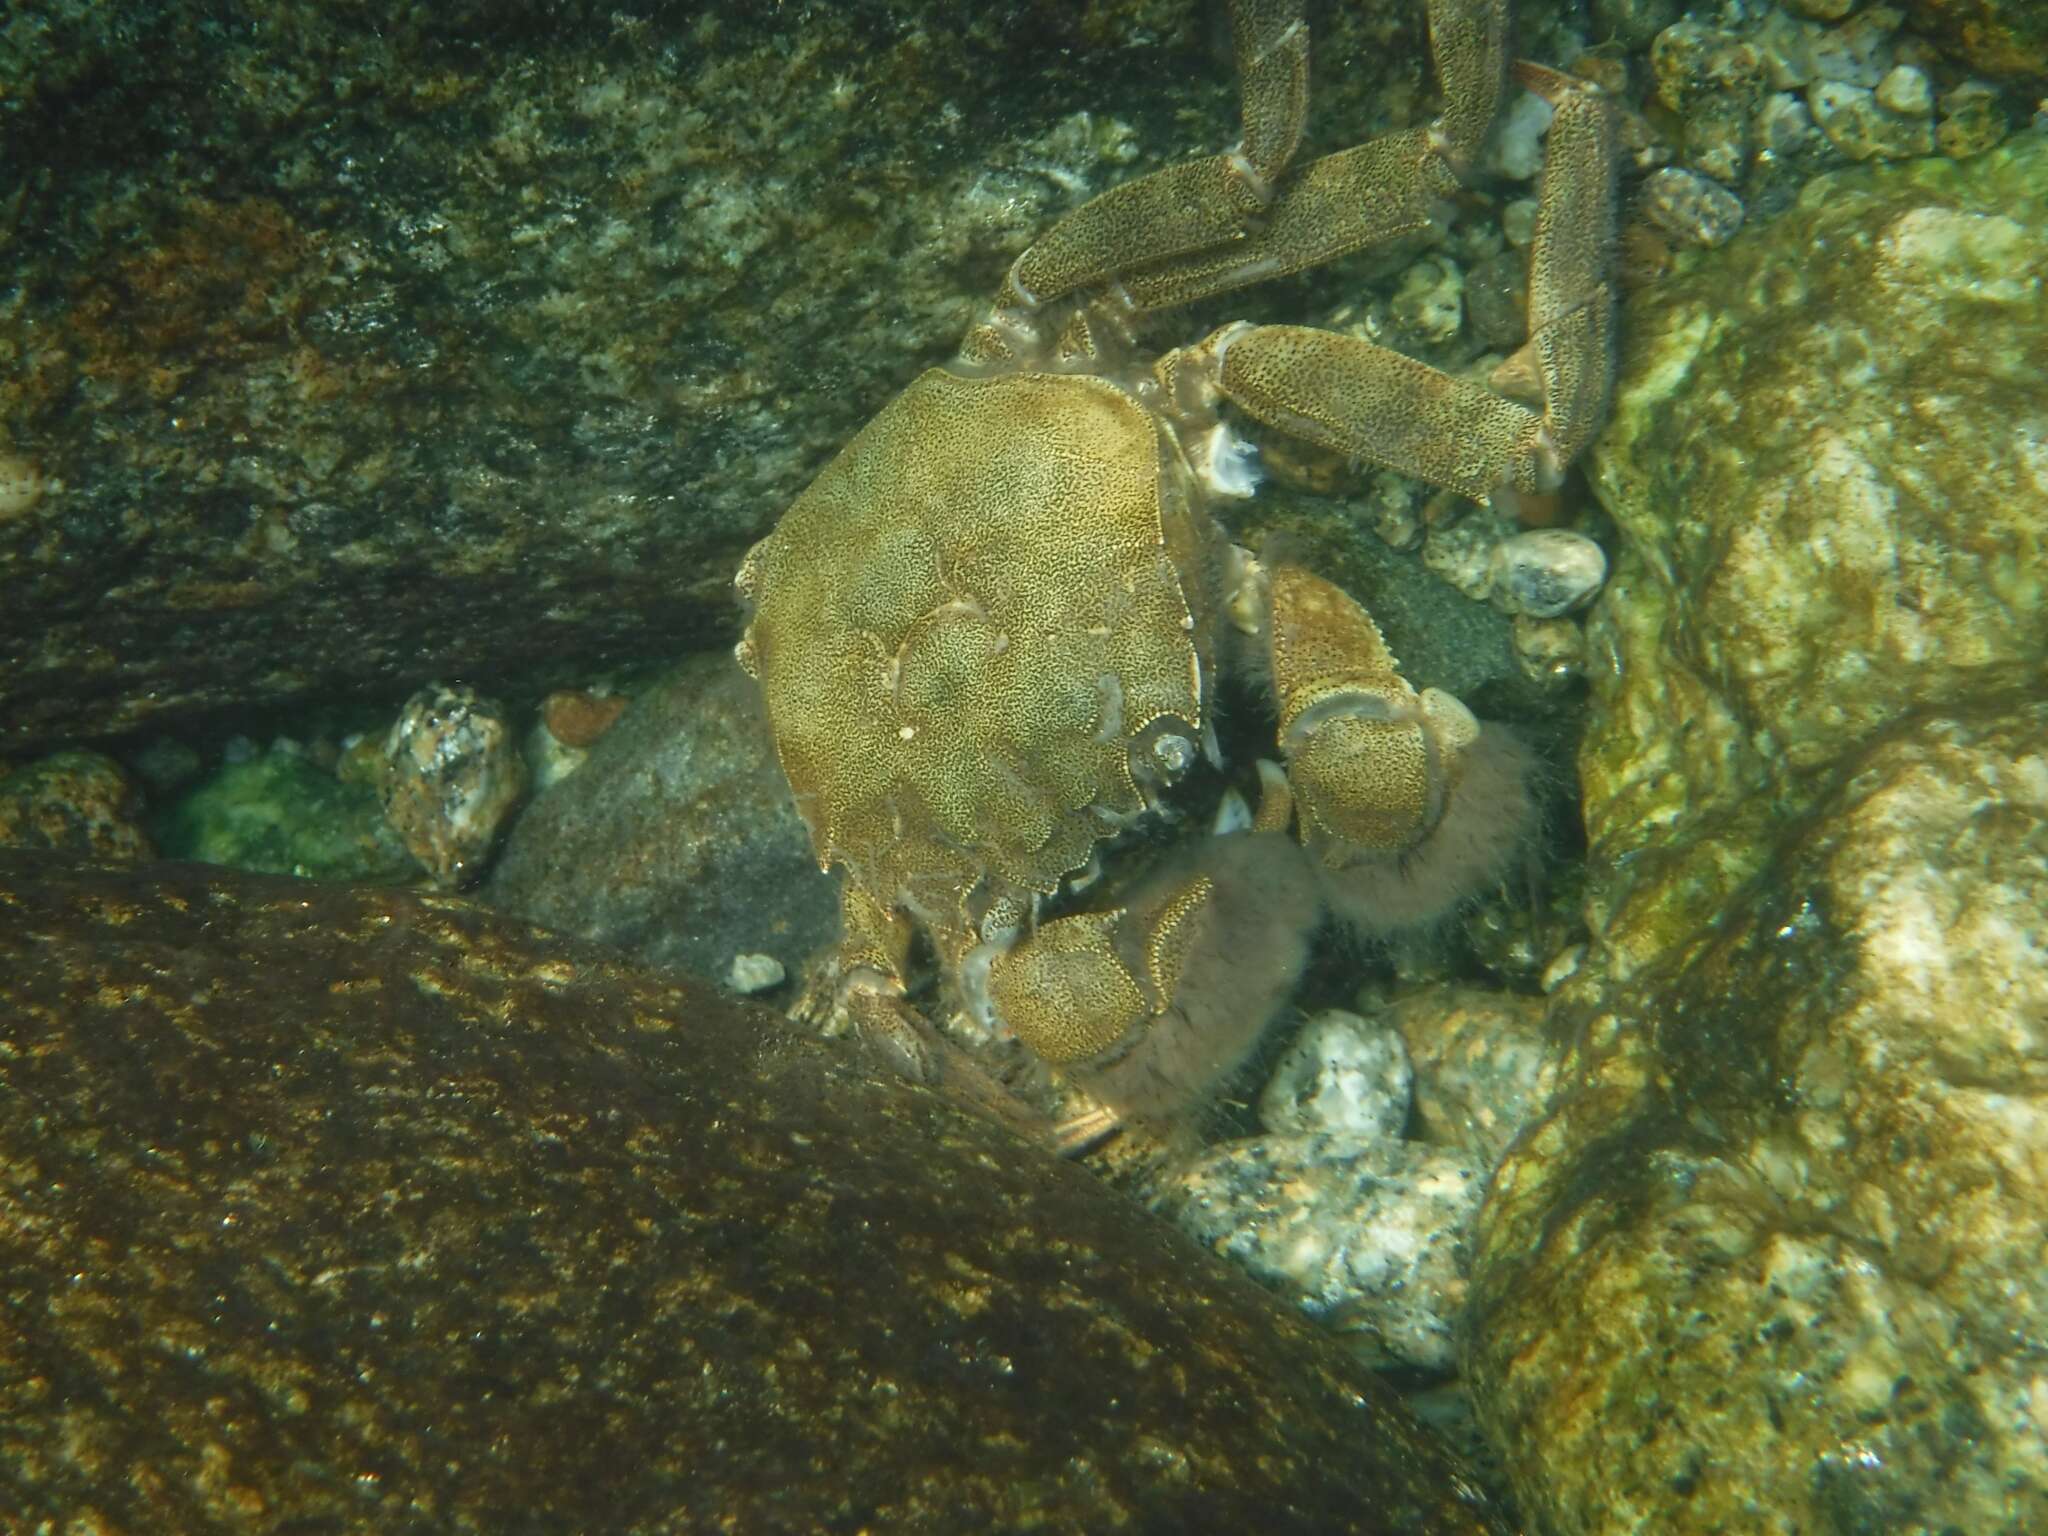 Image of Chinese mitten crab